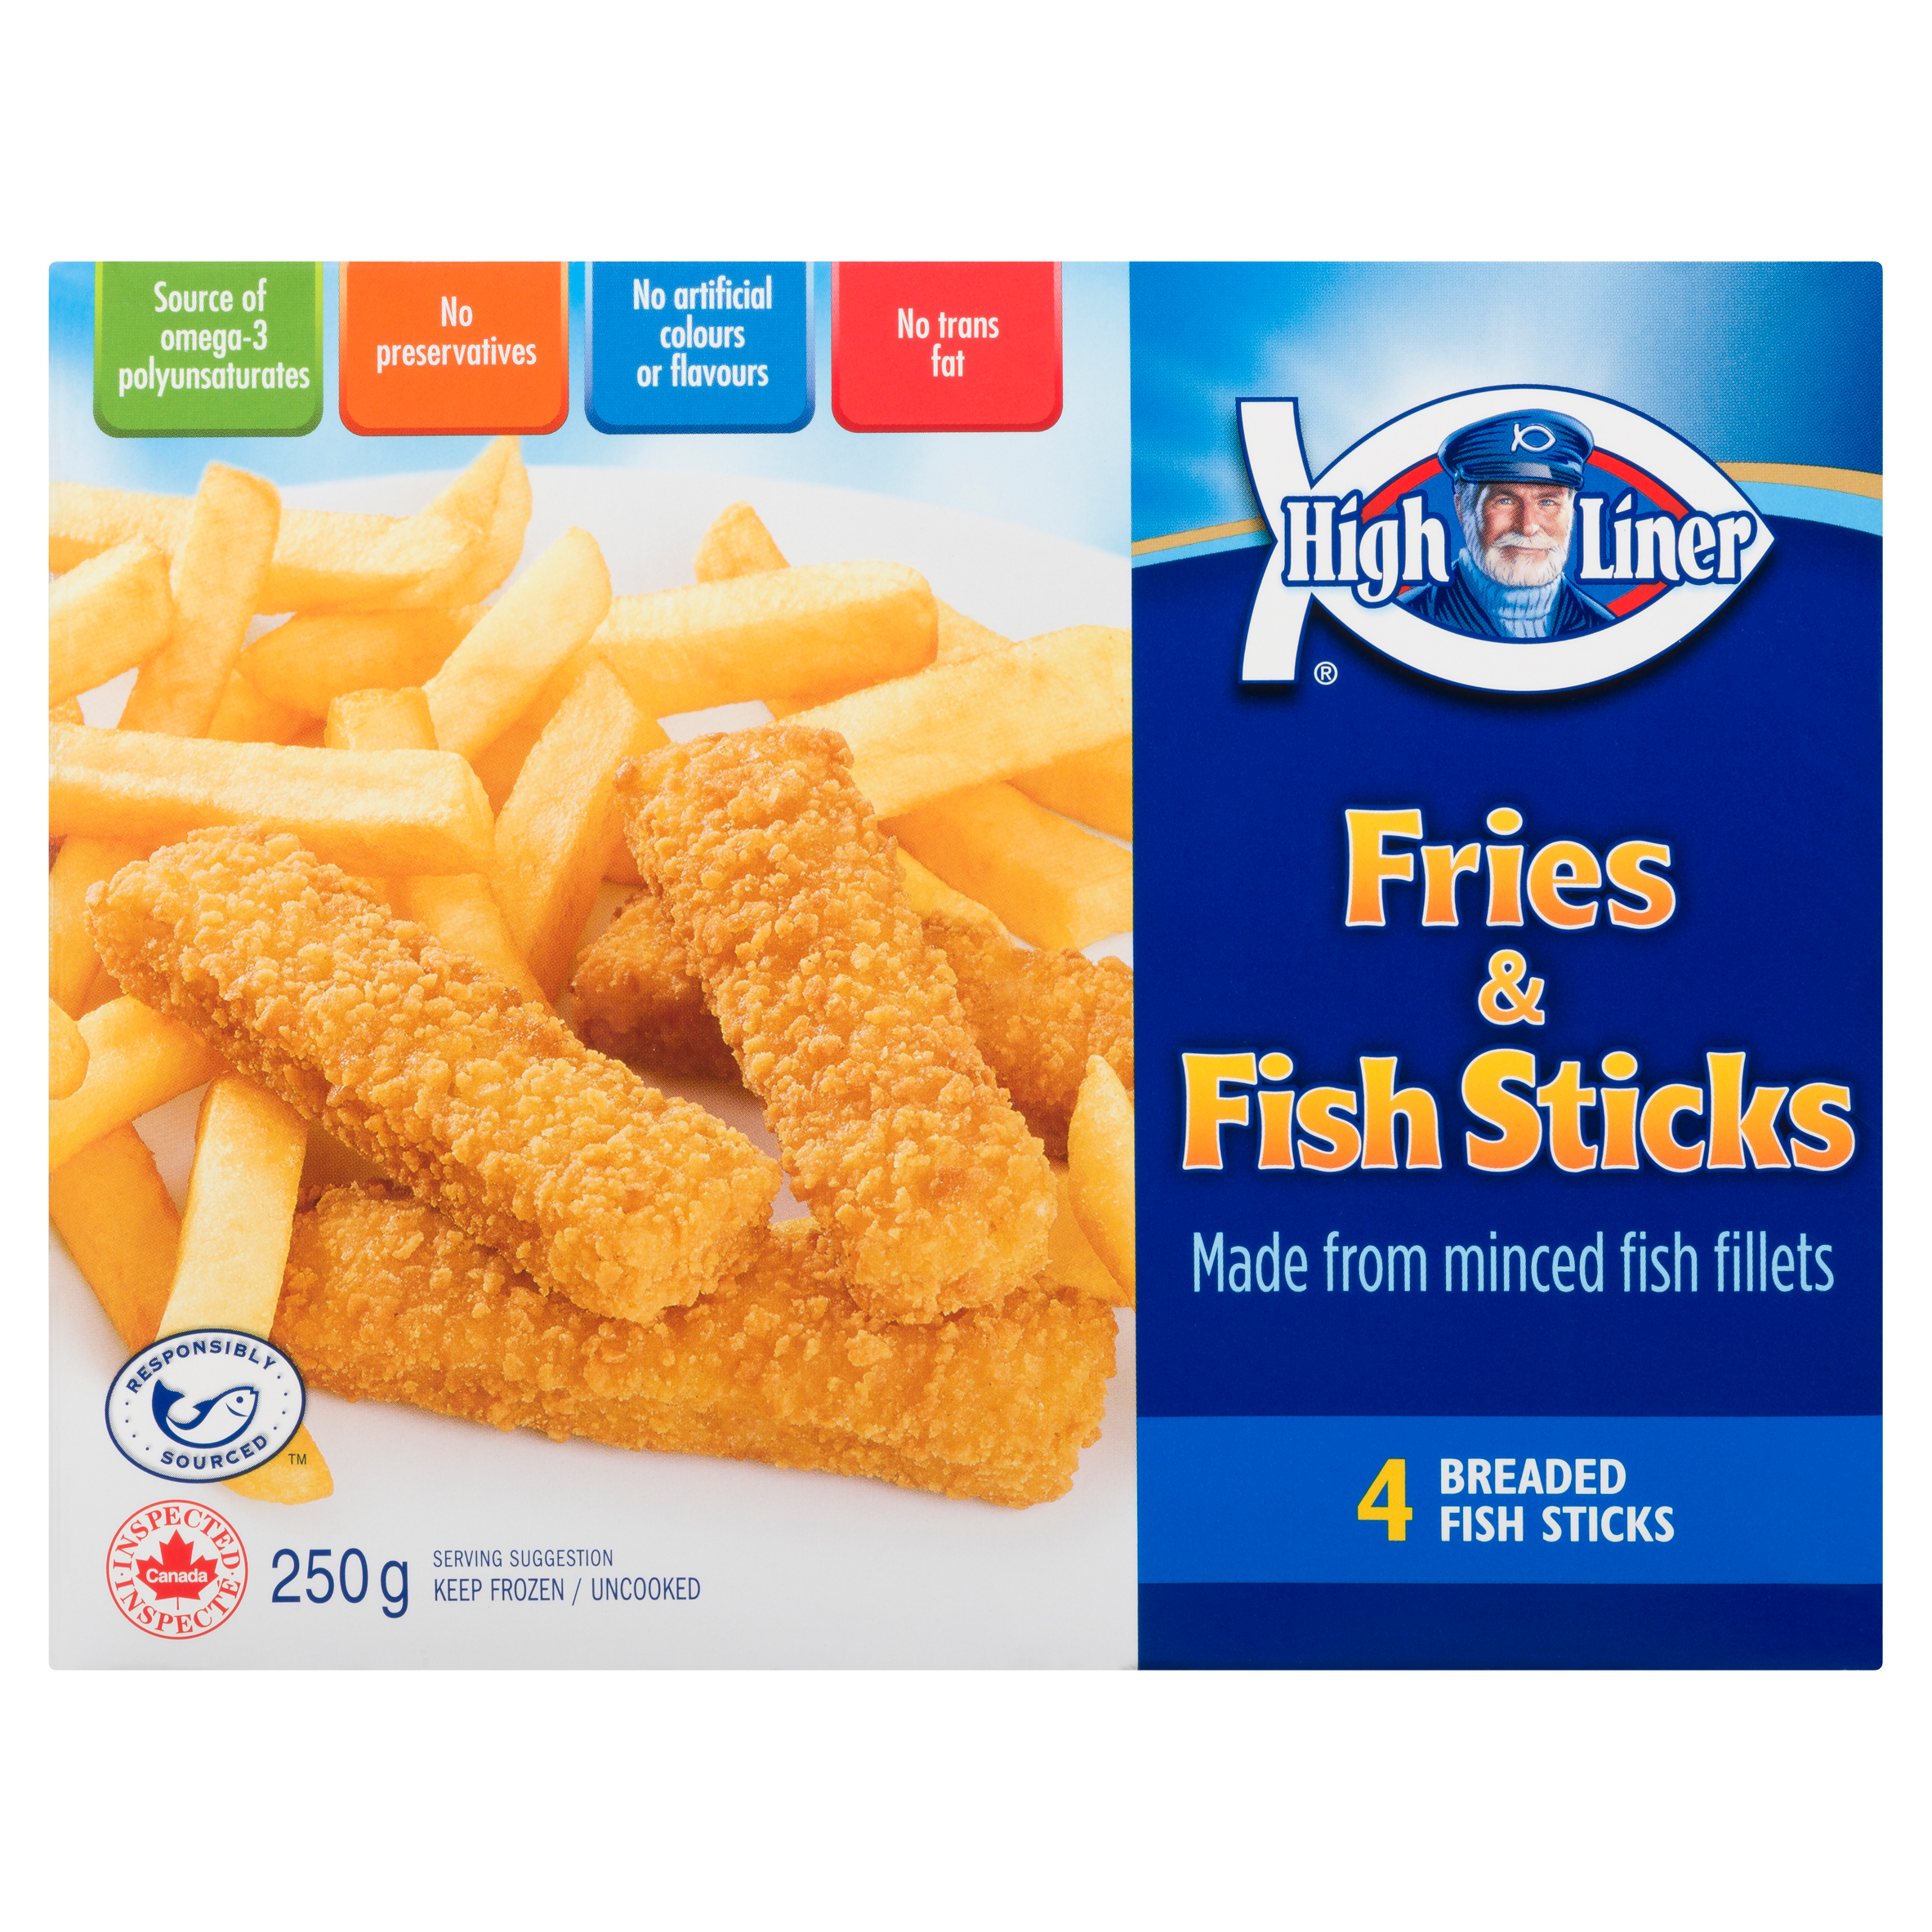 High Liner Fries & Fish Sticks 4 Breaded Fish Sticks 250 g